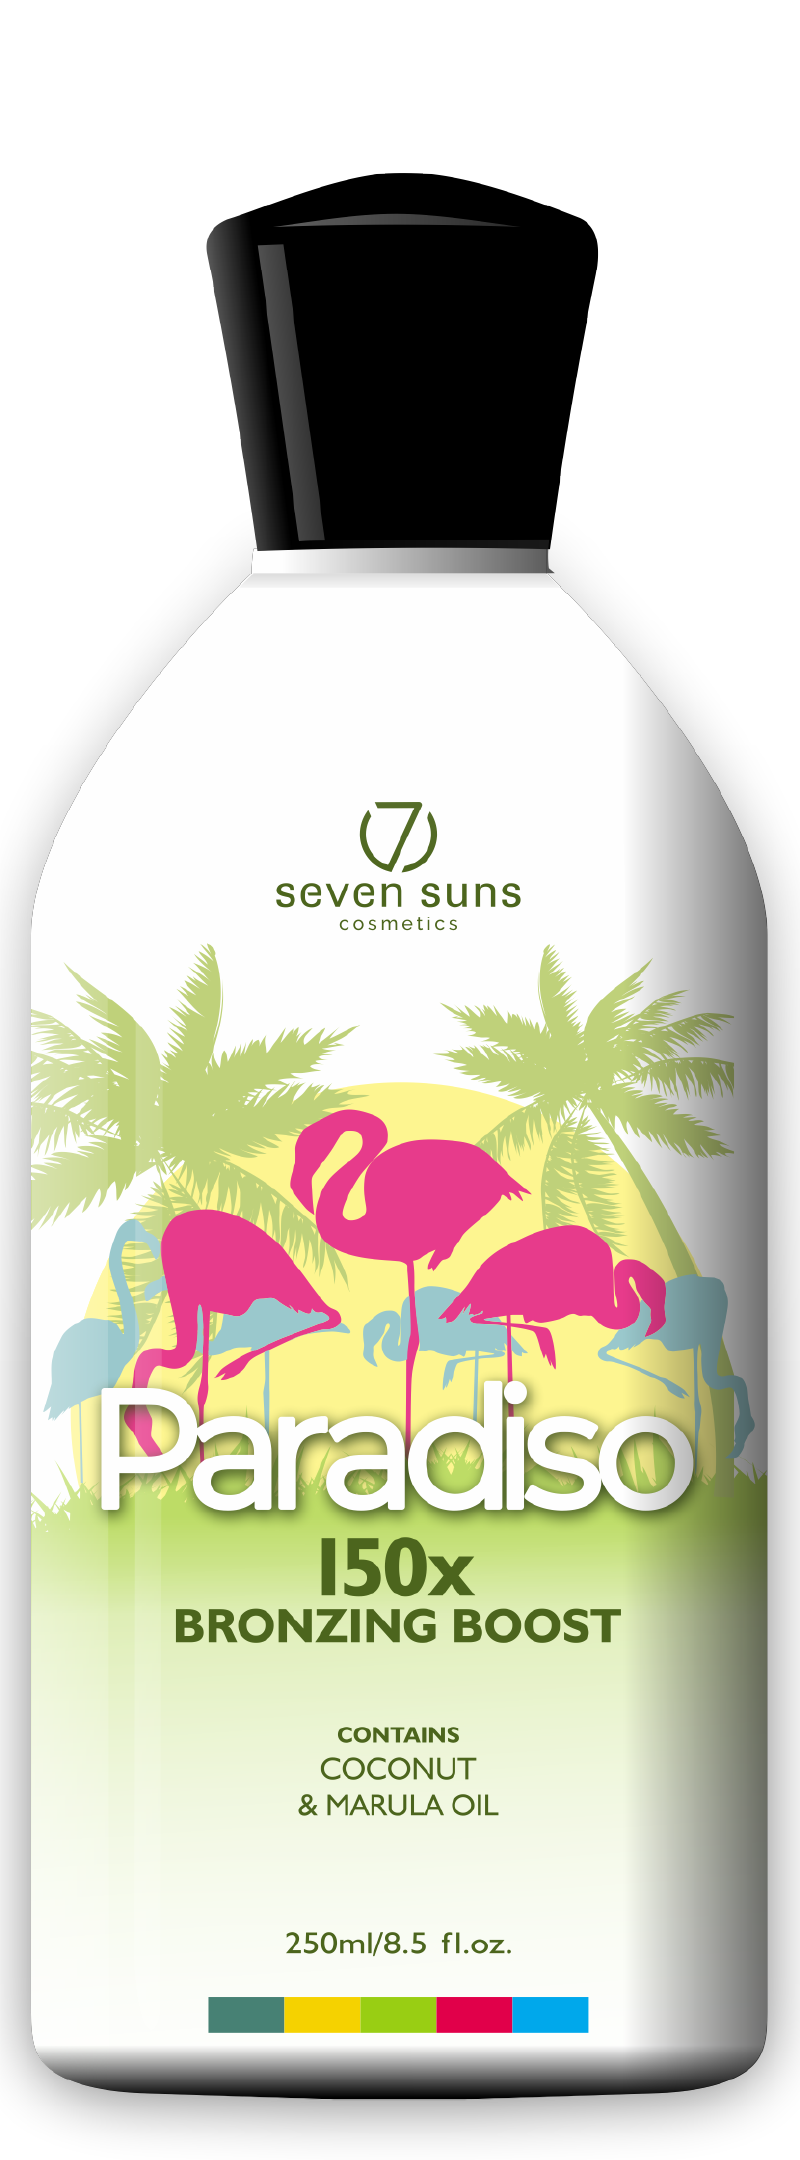 Paradiso bronzer bottle